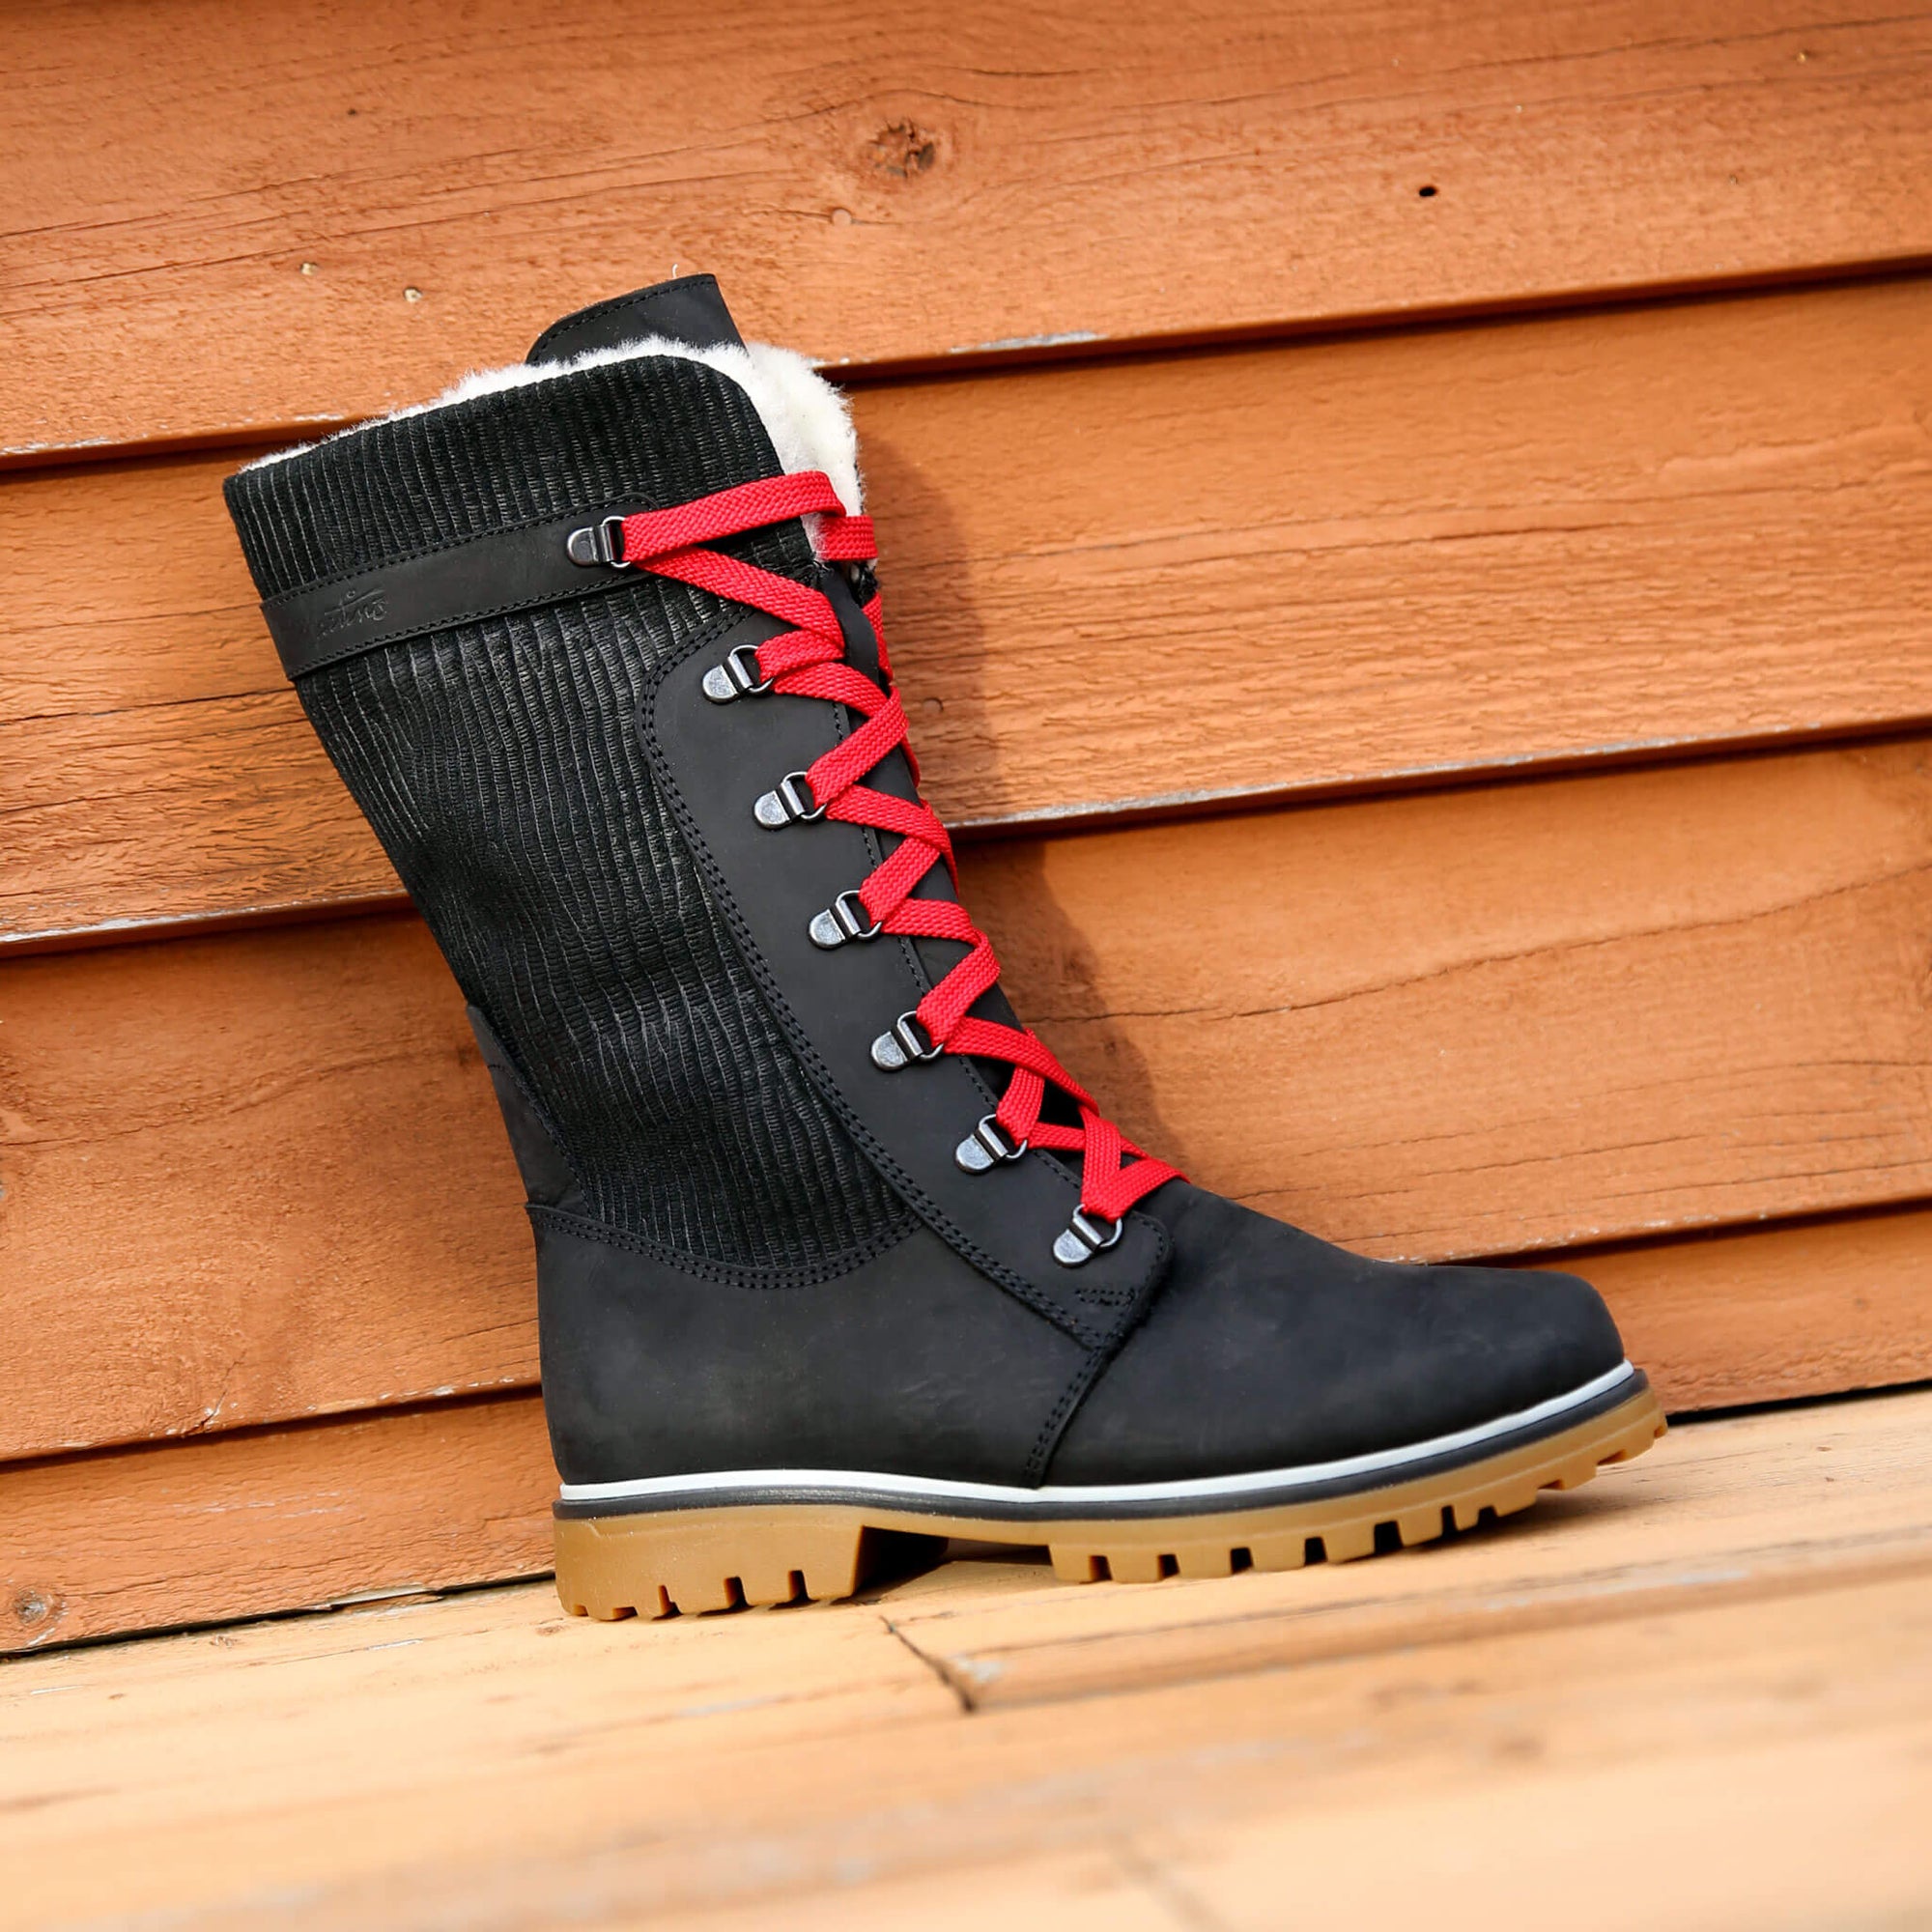 Marlee winter boot for women - Black 